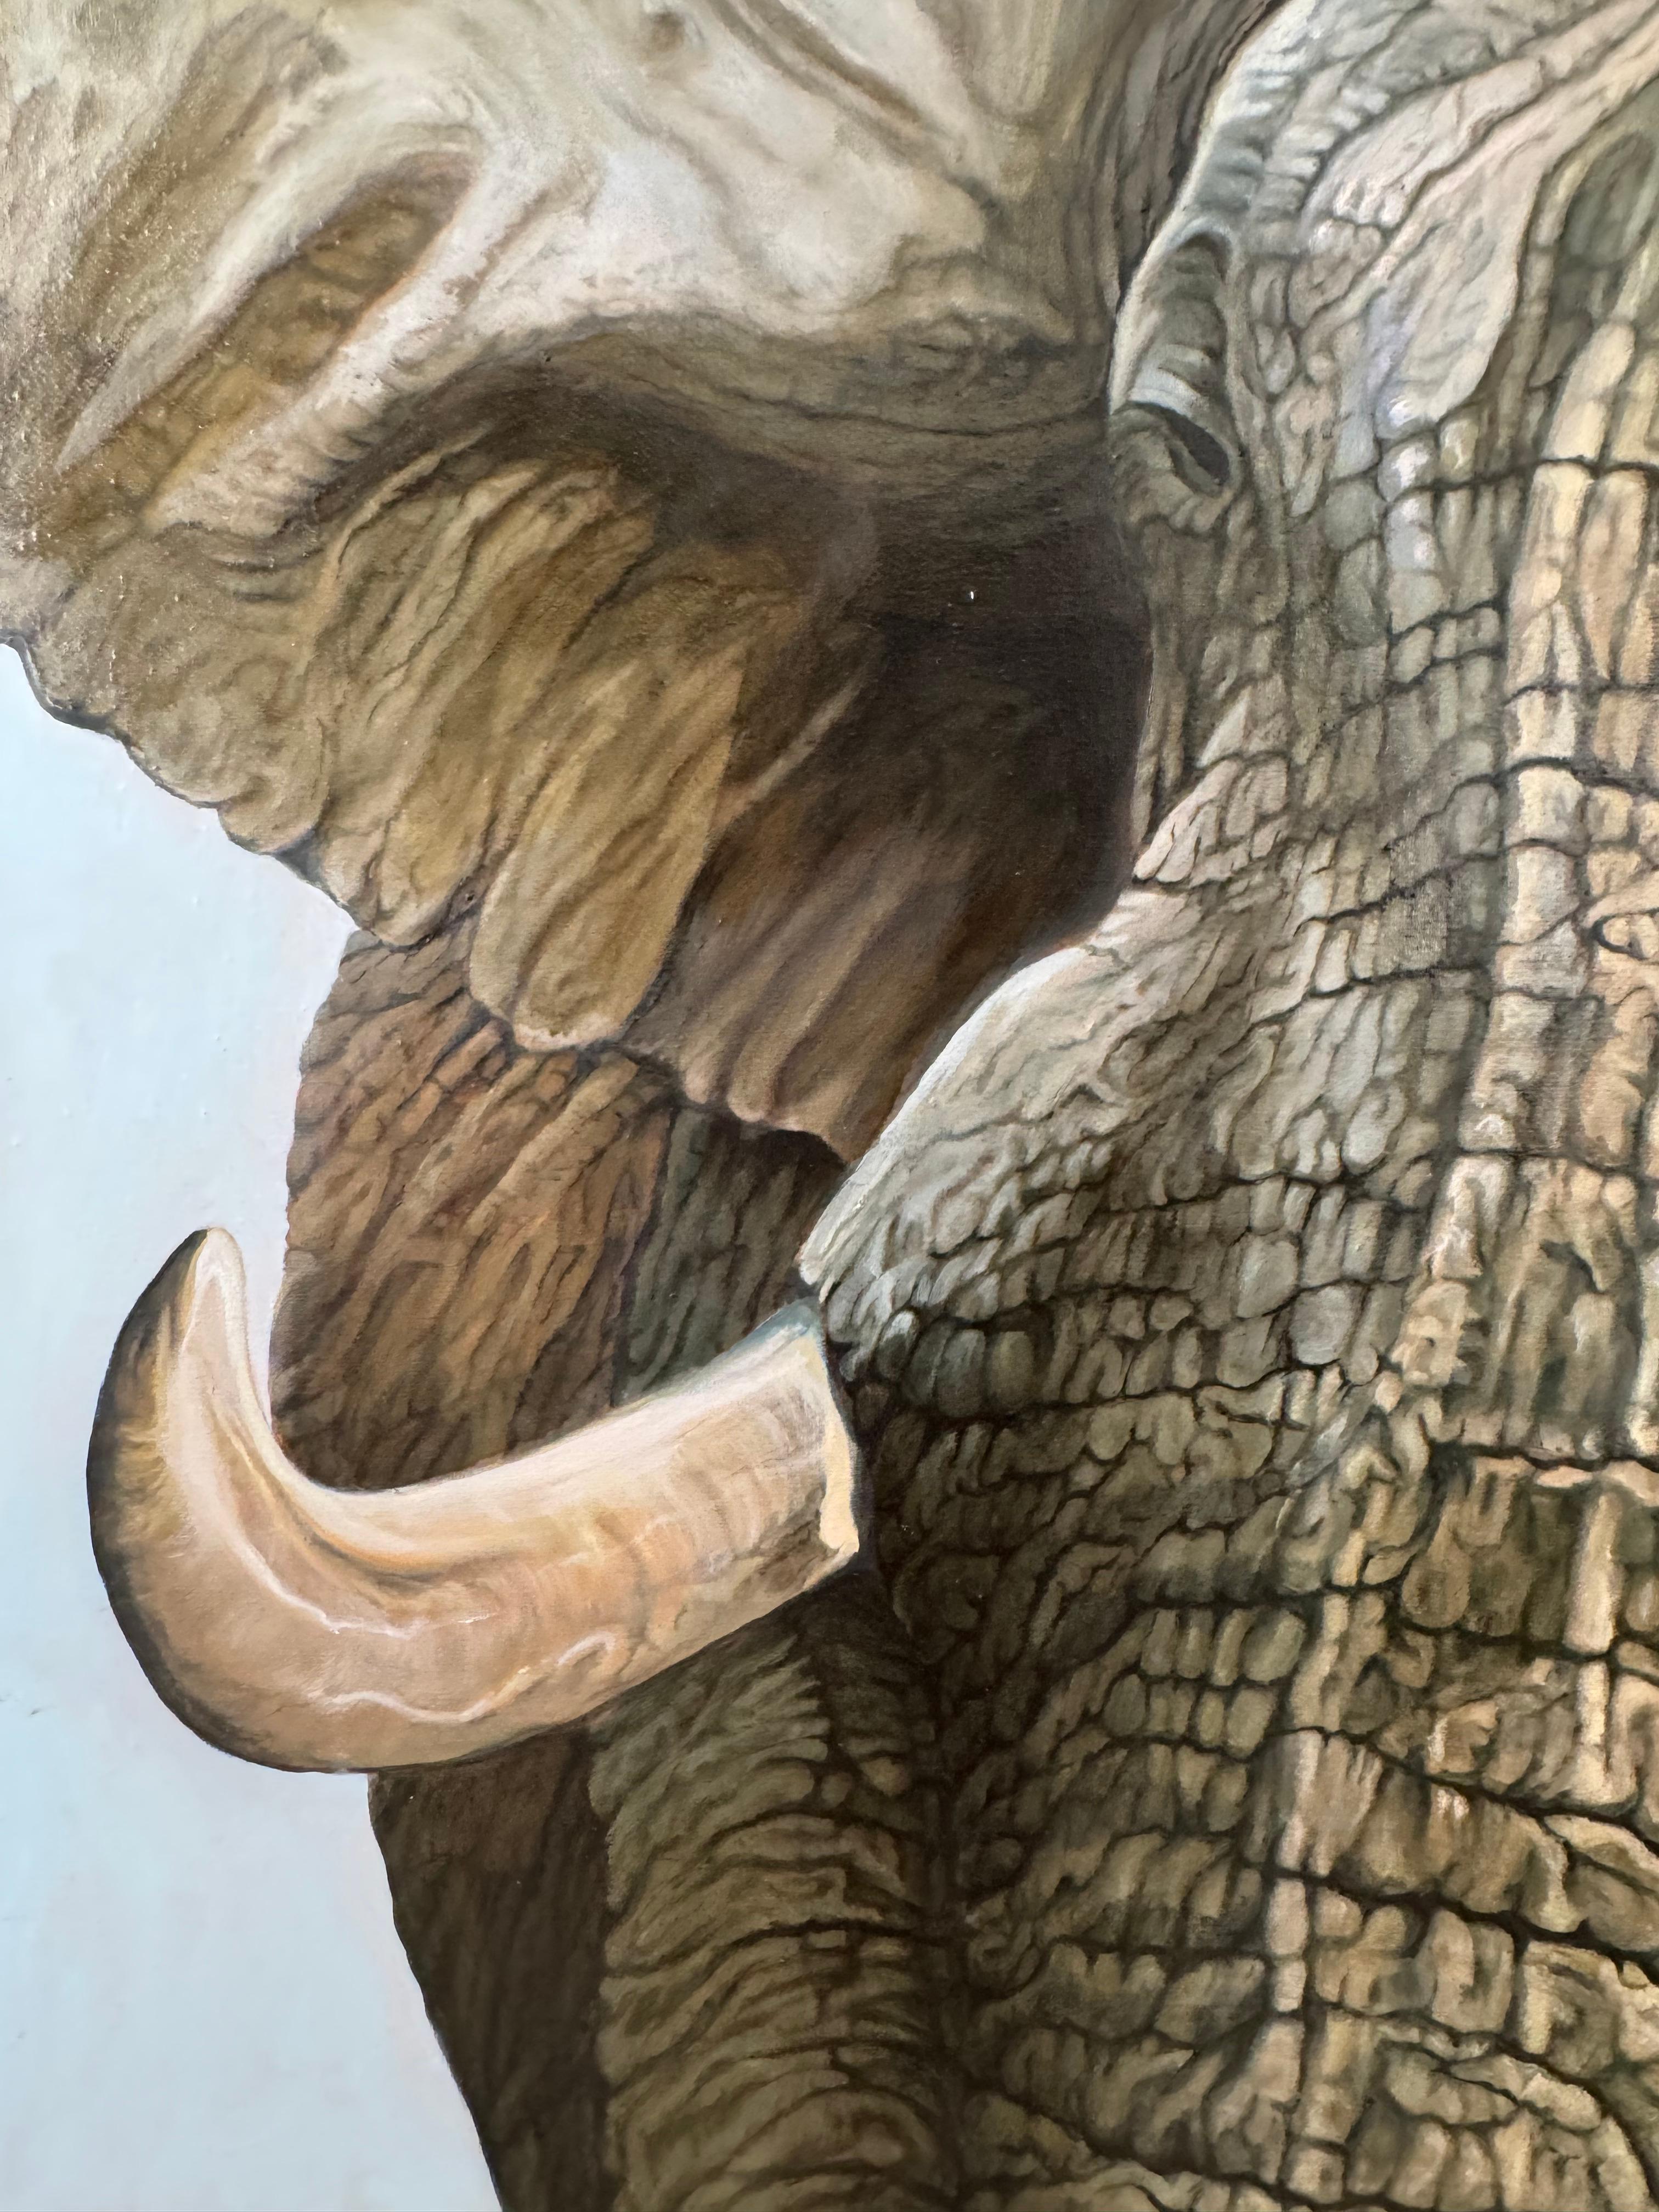 Portrait of an elephant